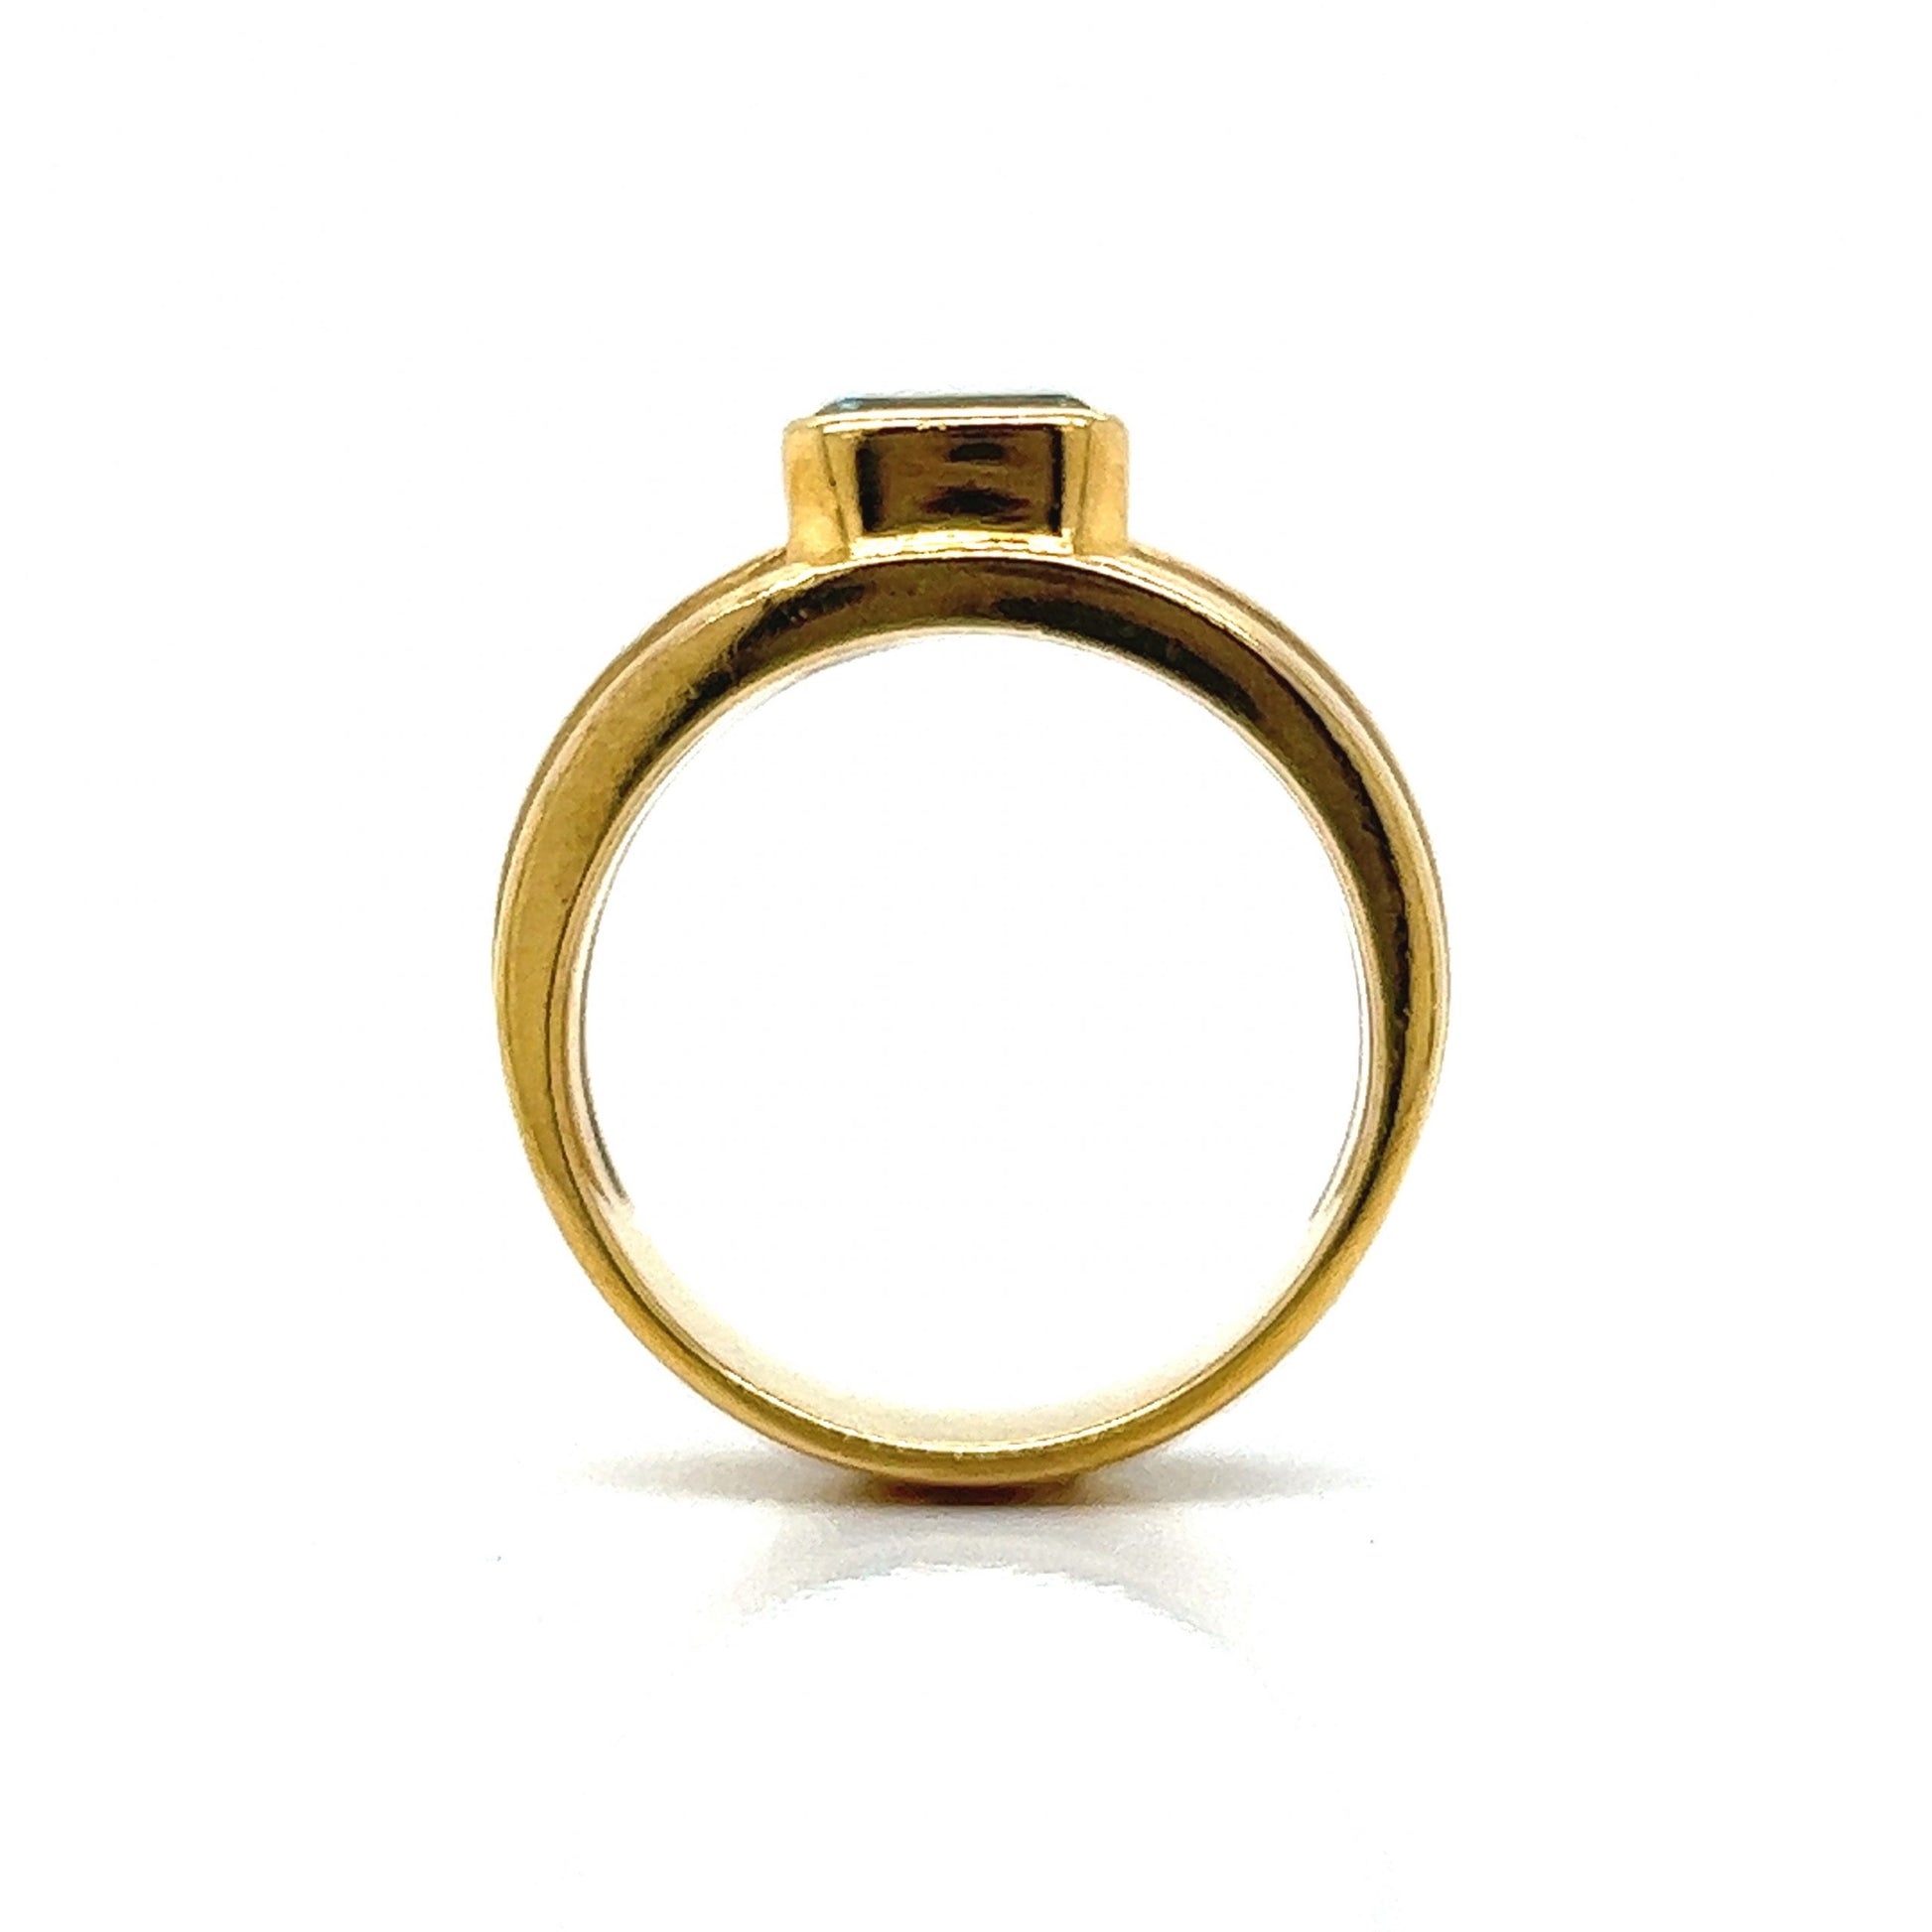 Tiffany & Co. Bezel Set Aquamarine Ring in 18k Yellow GoldComposition: 18 Karat Yellow Gold Ring Size: 7 Total Gram Weight: 9.9 g Inscription: Tiffany & Co. 1985 750
      